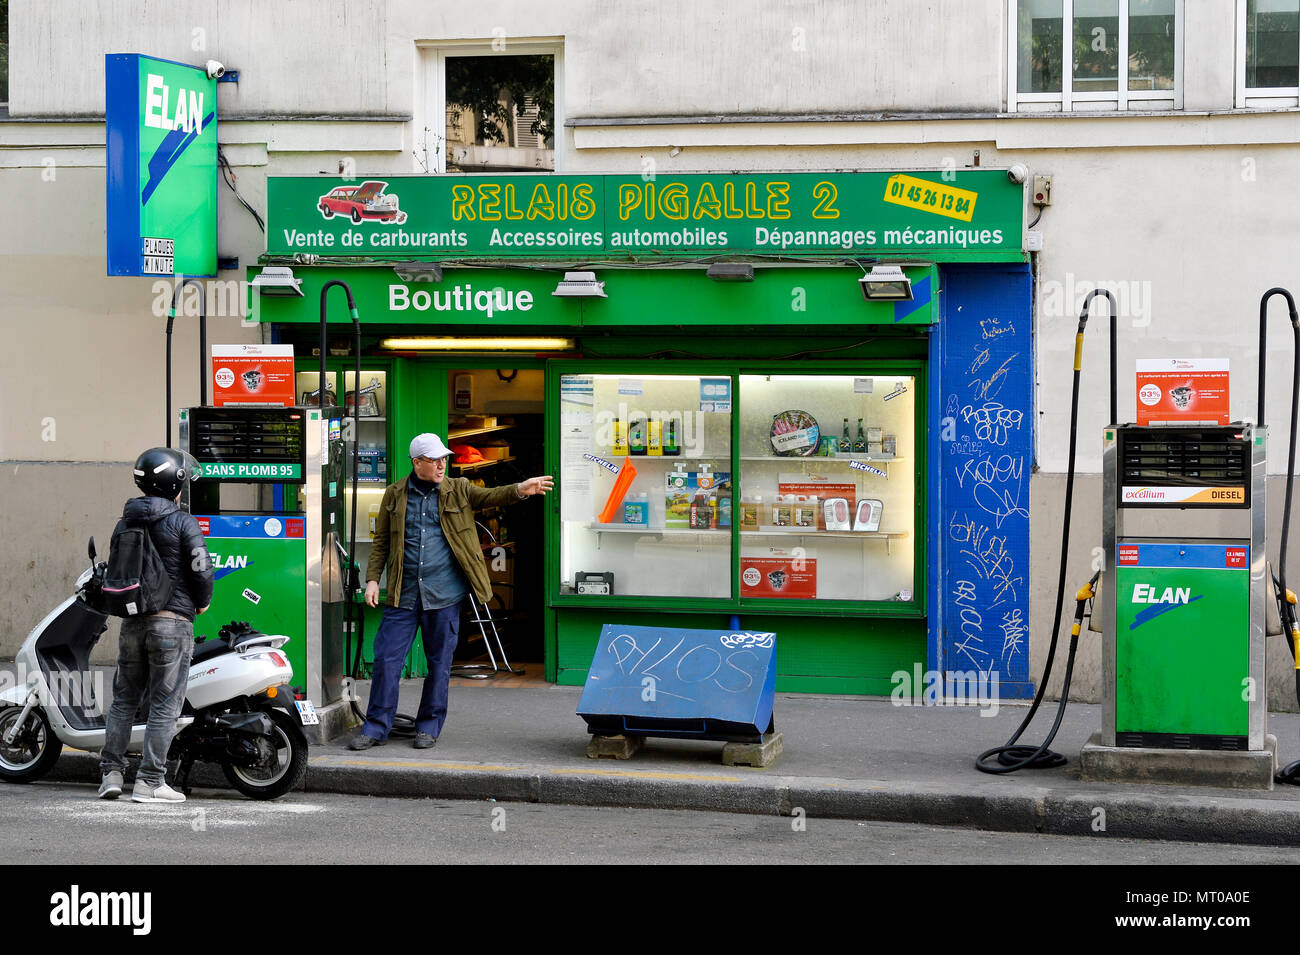 Gas station - Place Pigalle - Paris - France Stock Photo - Alamy